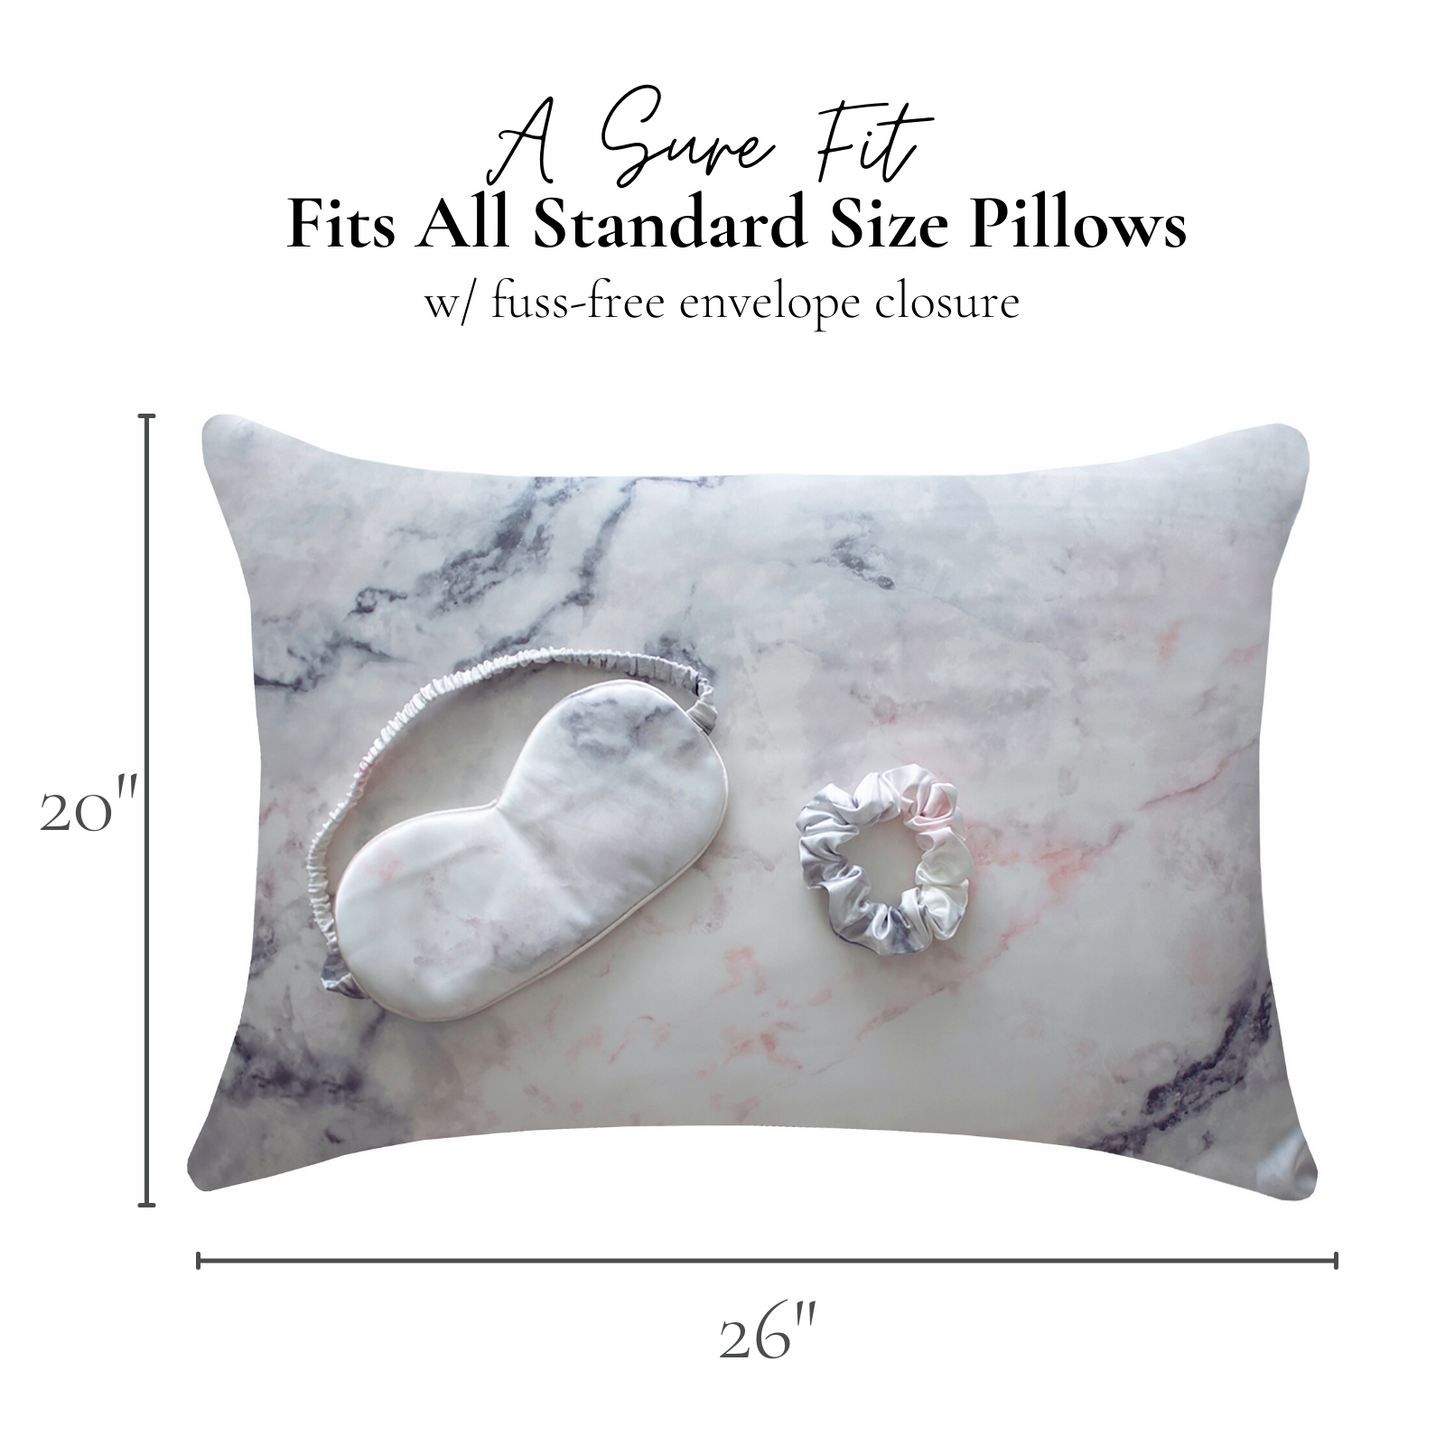 Satin Pillowcase Sleep Set, 2 Pack - Pastel Marble